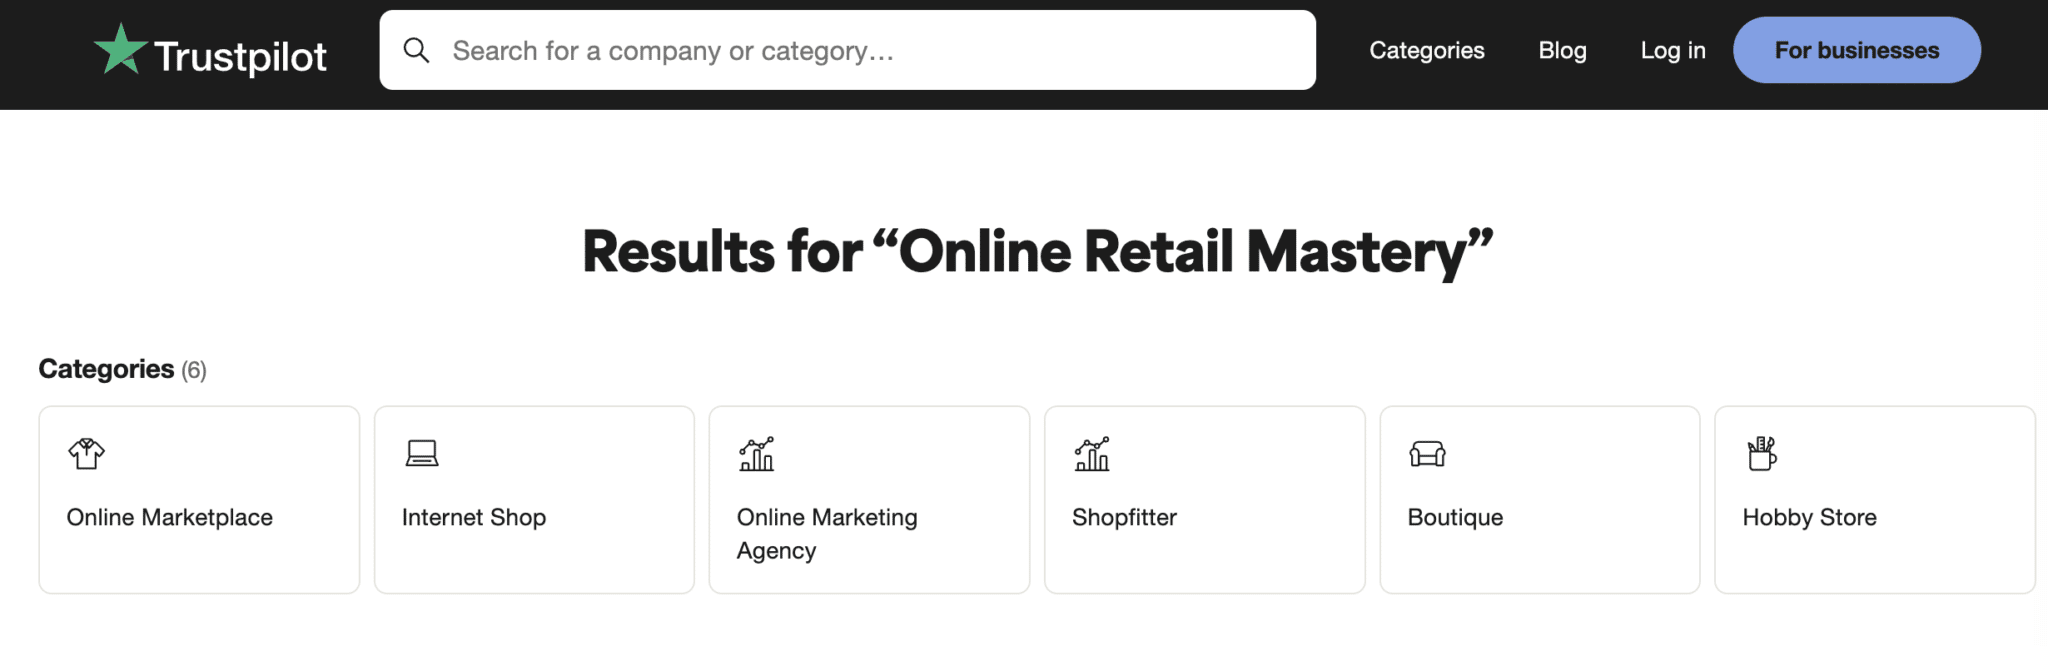 Online Retail Mastery Trustpilot